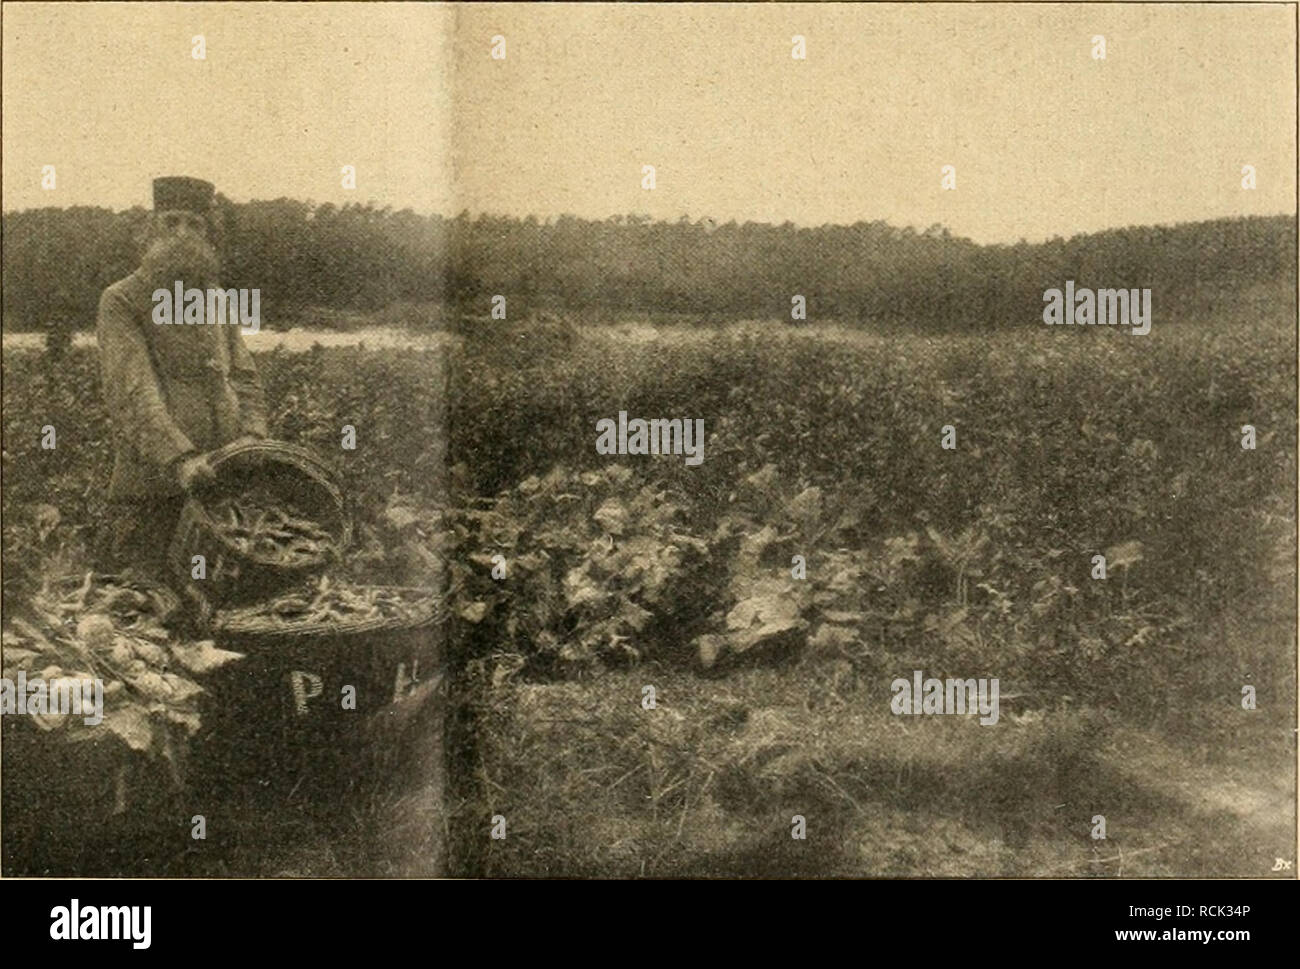 Gute luise fotografías imágenes alta e resolución - de Alamy